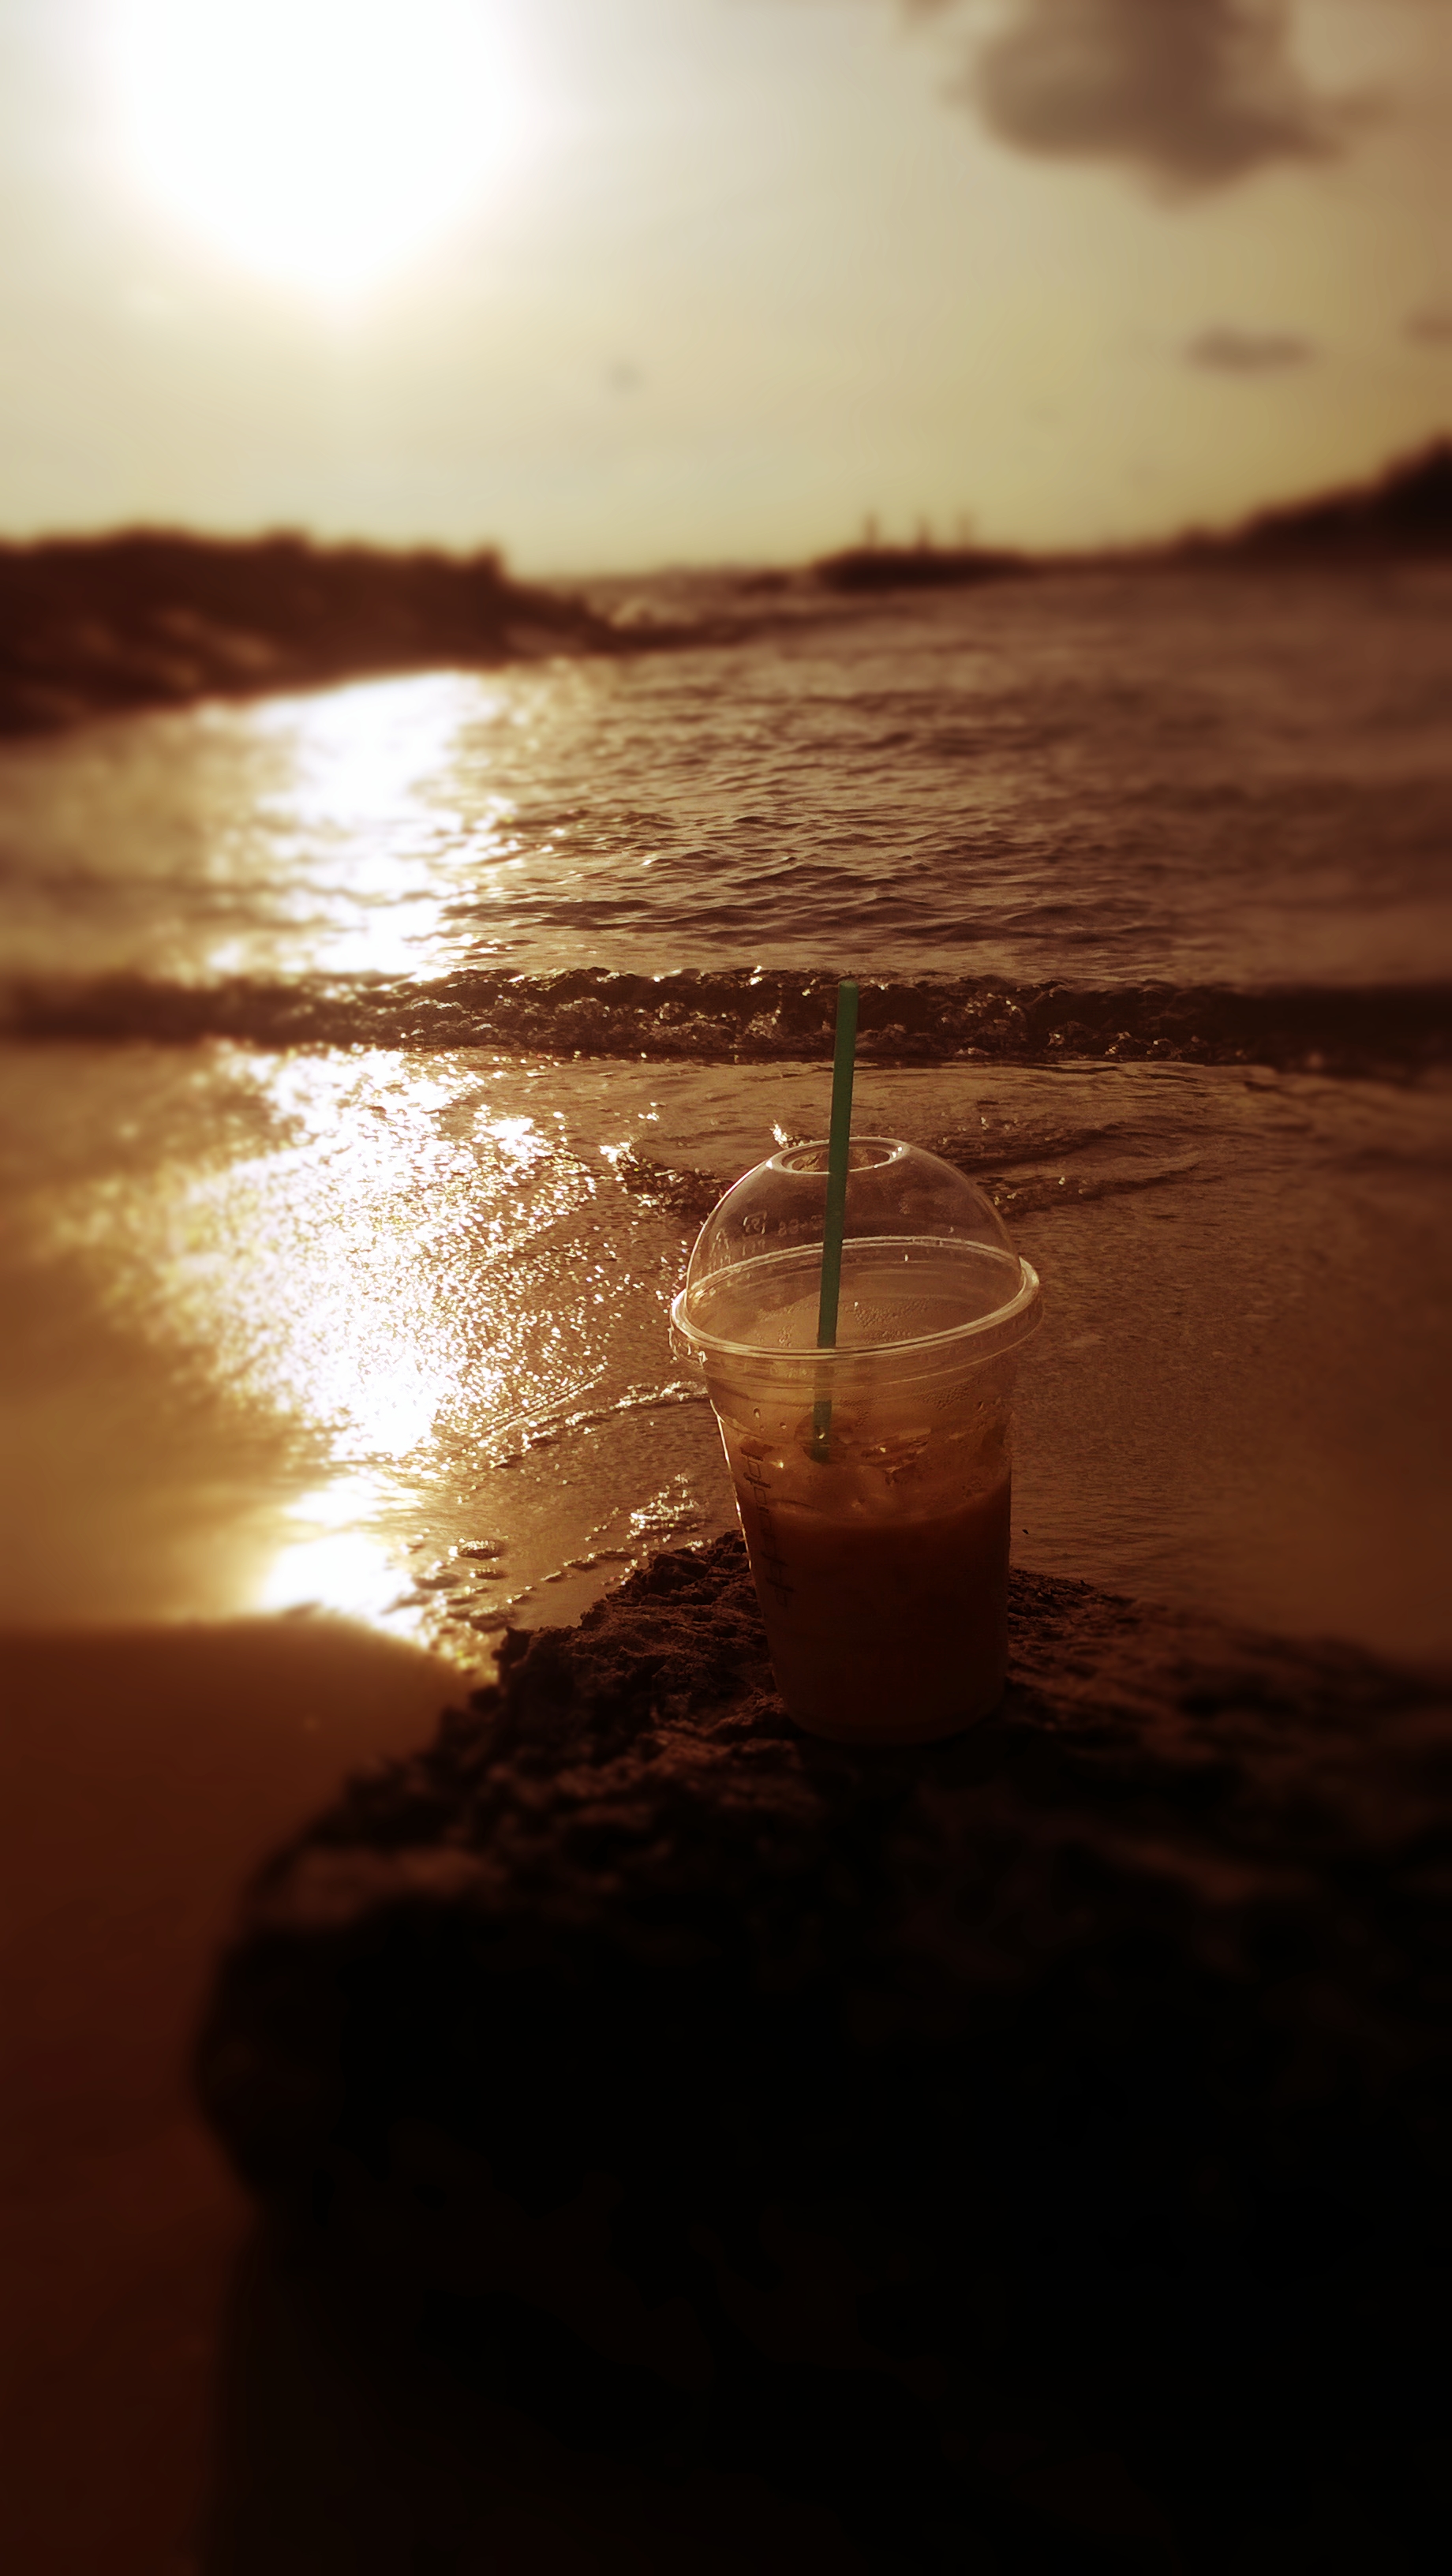 Ice coffee on the beach photo